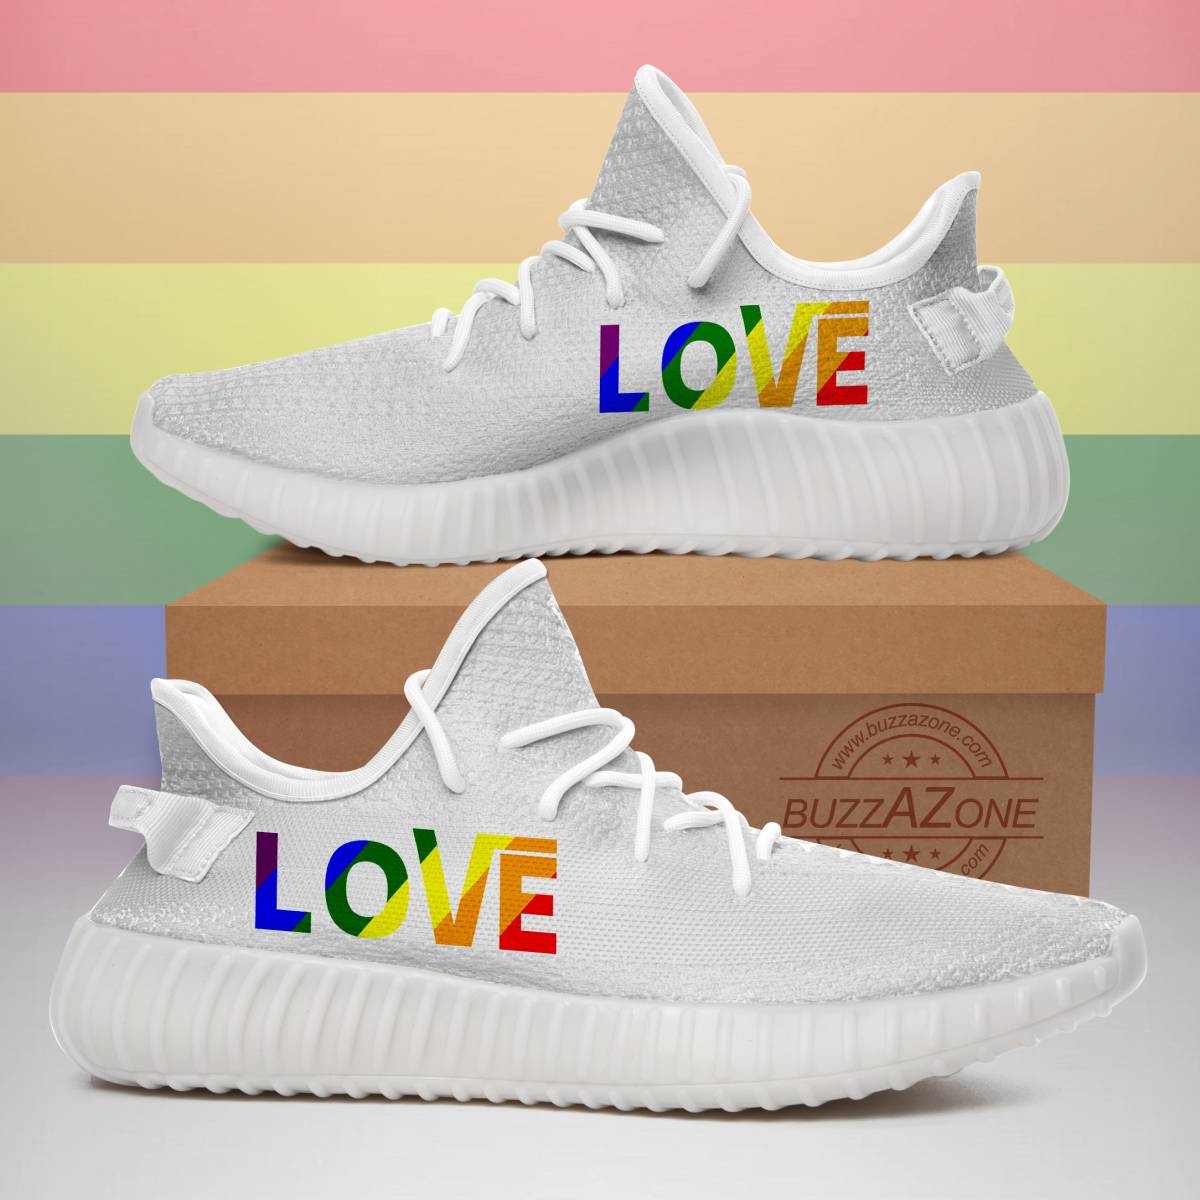 LGBT love custom yeezy shoes 3